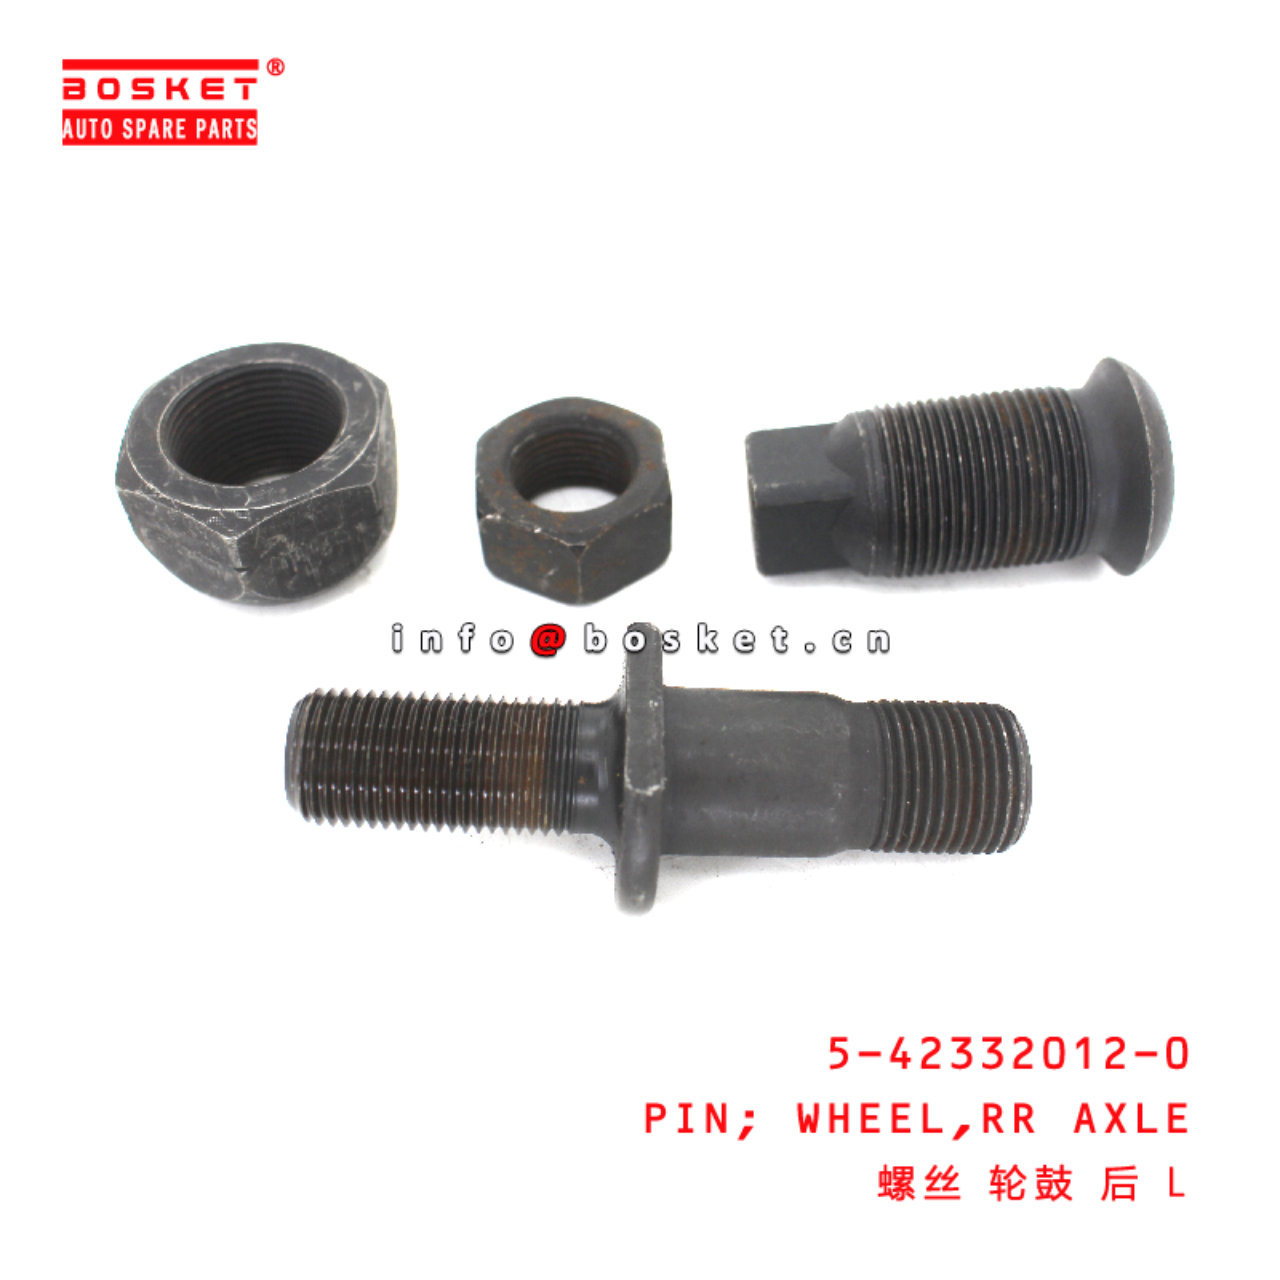 5-42332012-0 Rear Axle Wheel Pin suitable for ISUZU   5423320120